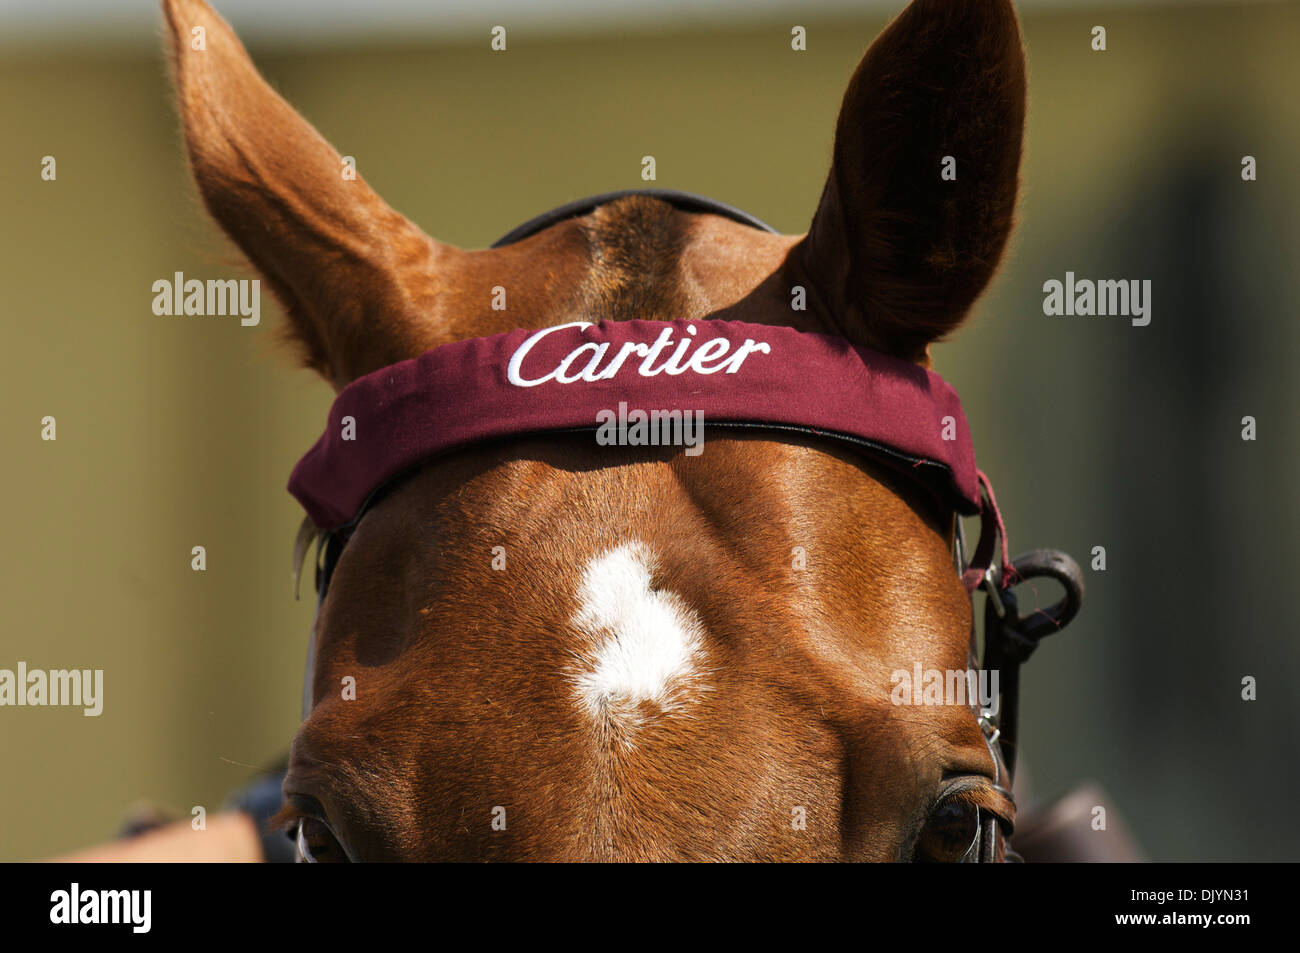 cartier horse